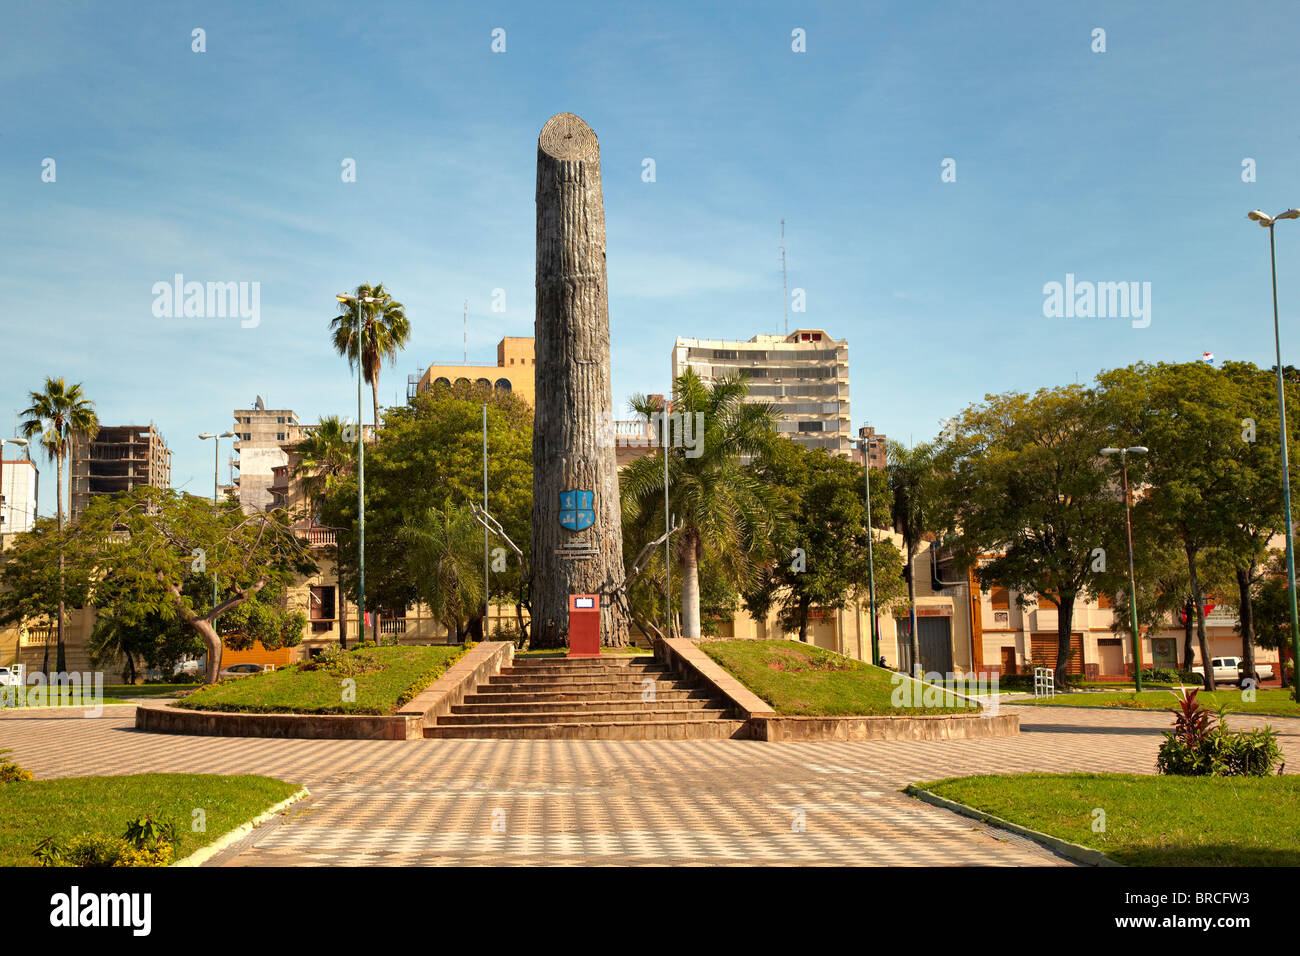 Madre de Ciudades Monument, Plaza de Armas, Asuncion, Paraguay Stock Photo